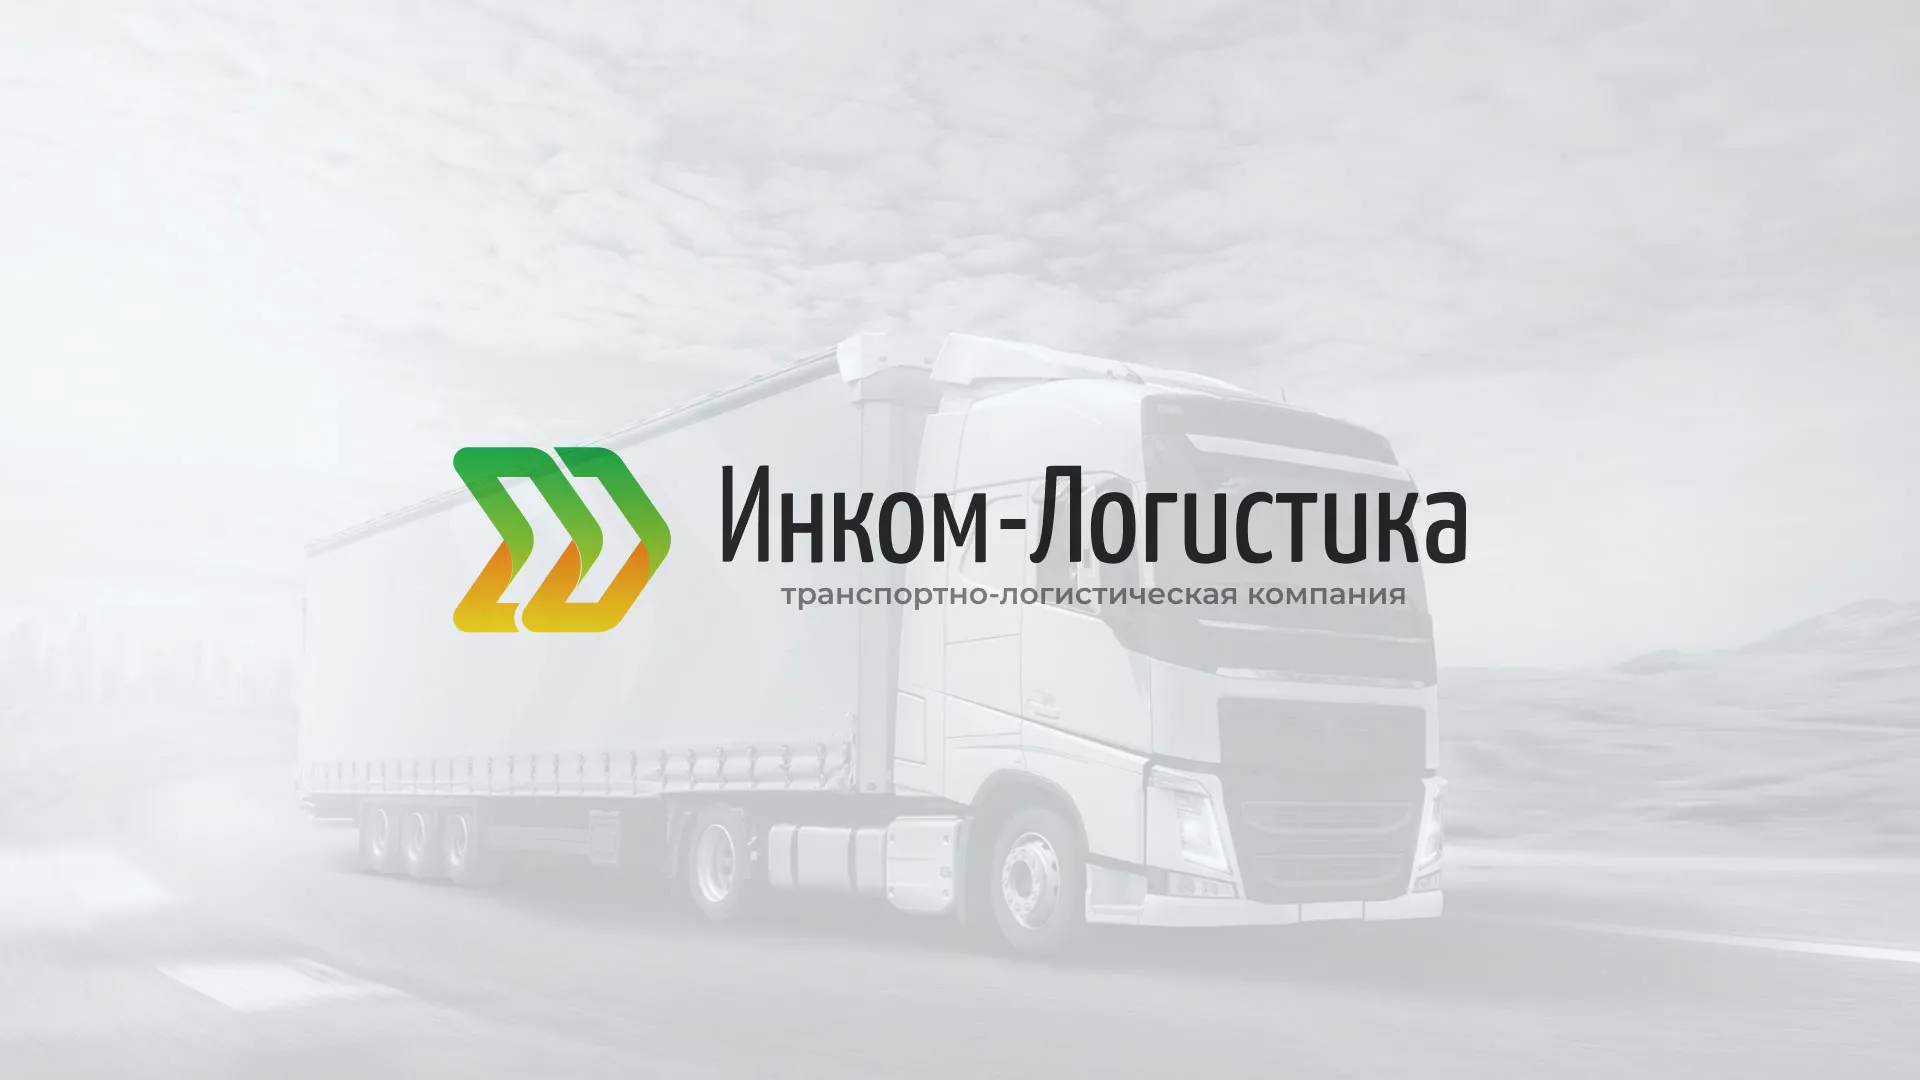 Разработка логотипа и сайта компании «Инком-Логистика» в Шенкурске